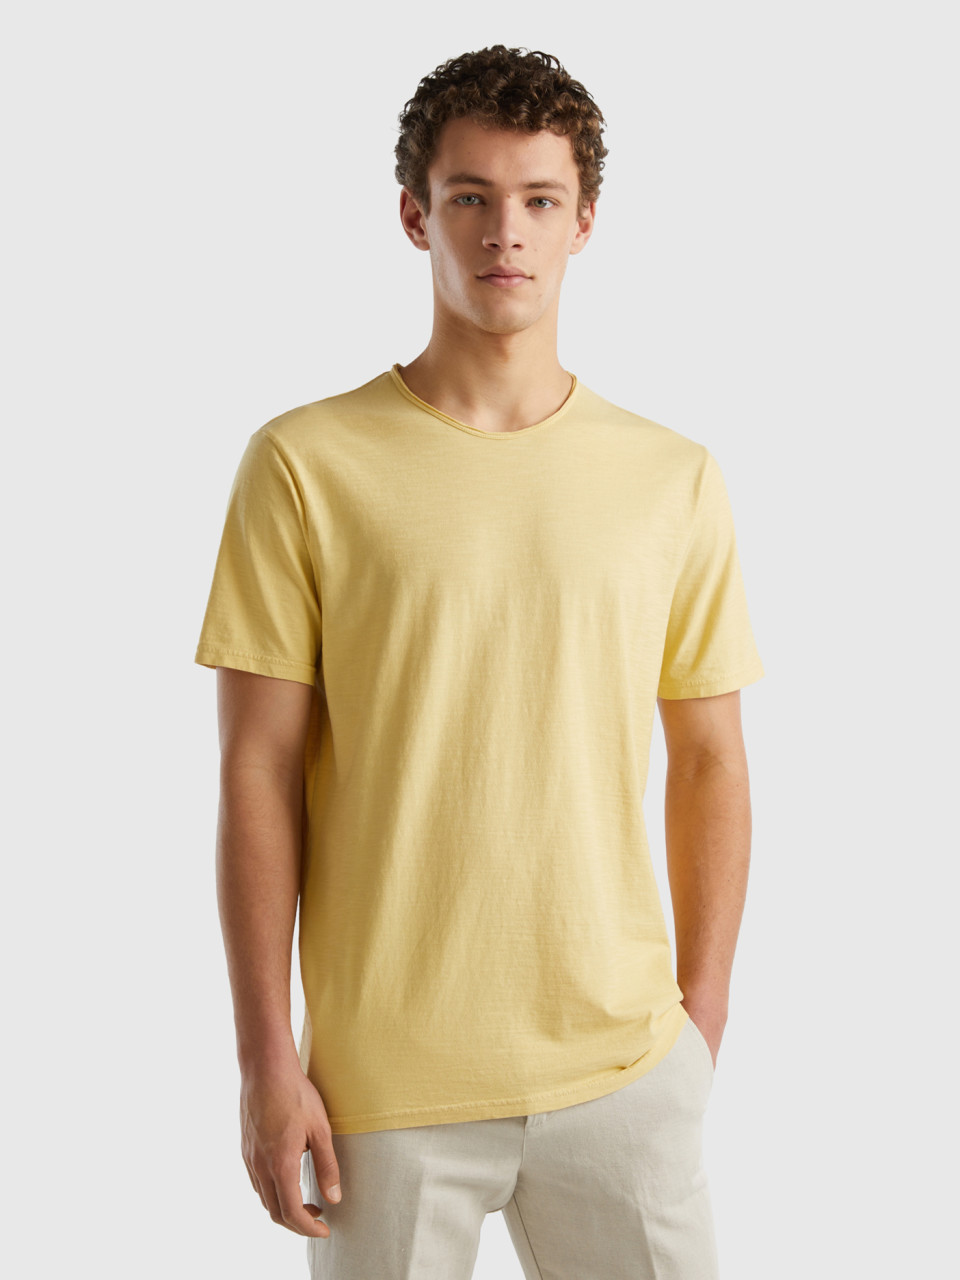 Benetton, Pastel Yellow Slub Cotton T-shirt, Yellow, Men